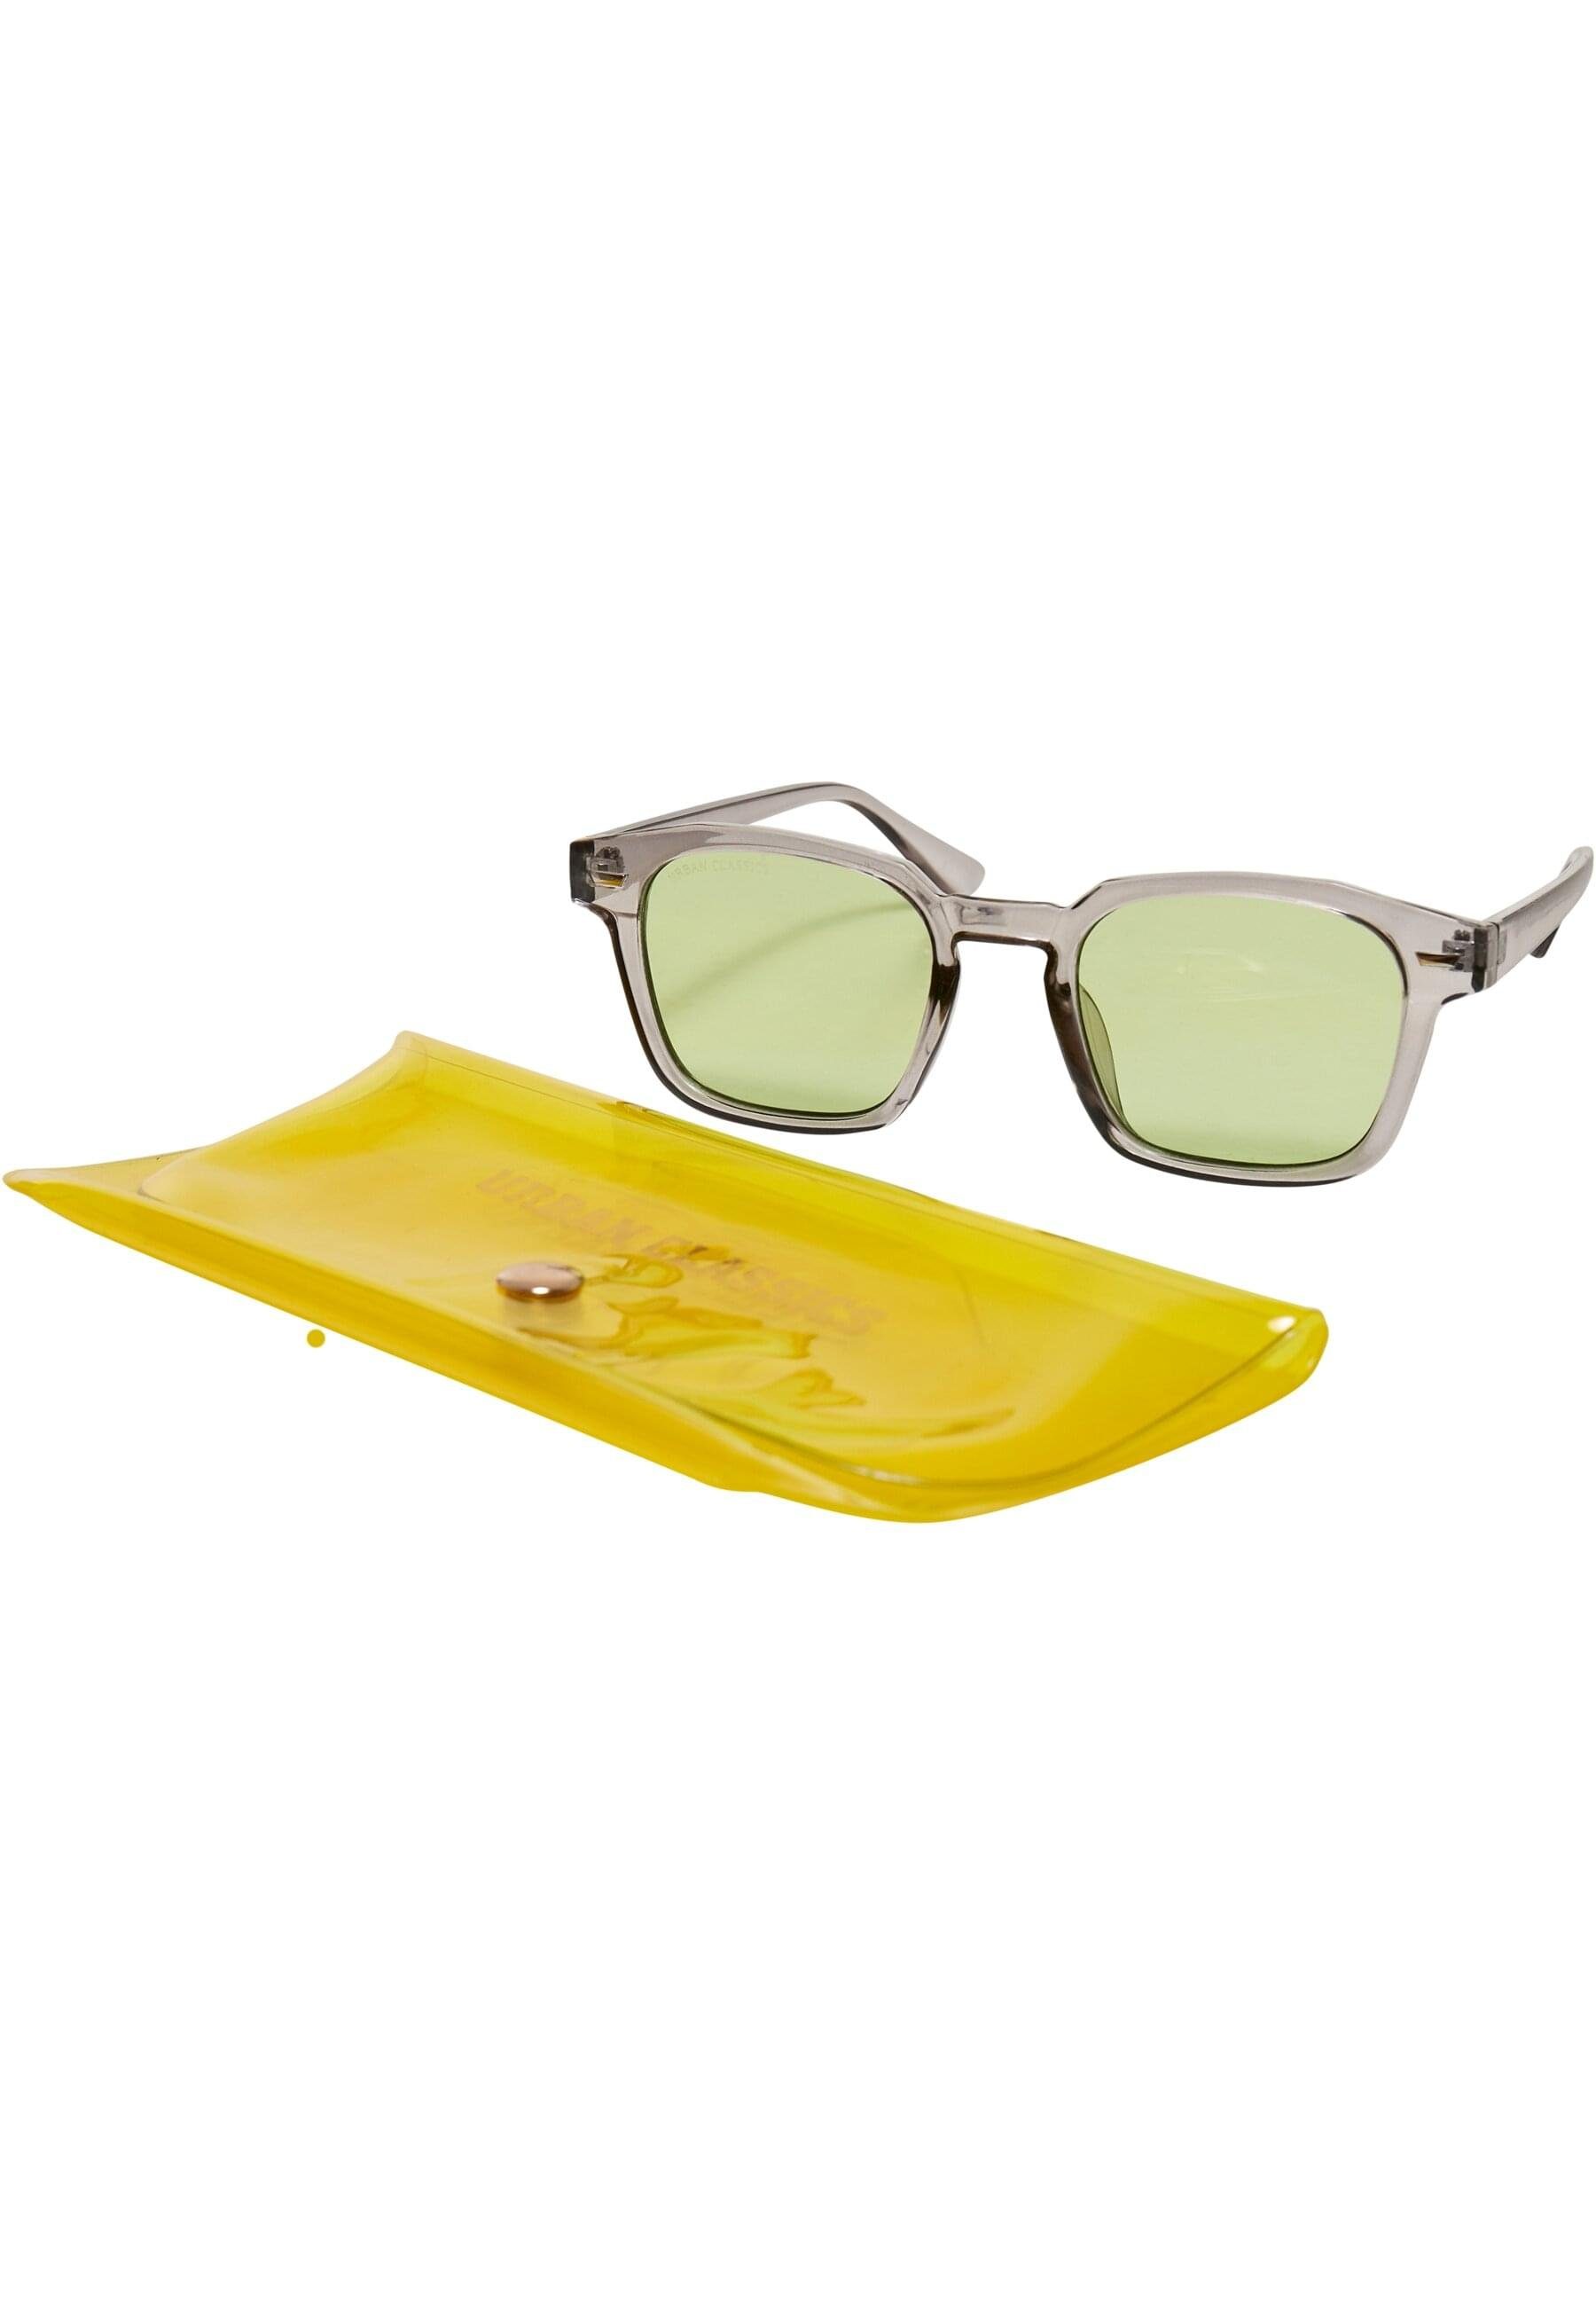 grey/yellow Case Maui Sonnenbrille With URBAN Sunglasses CLASSICS Unisex